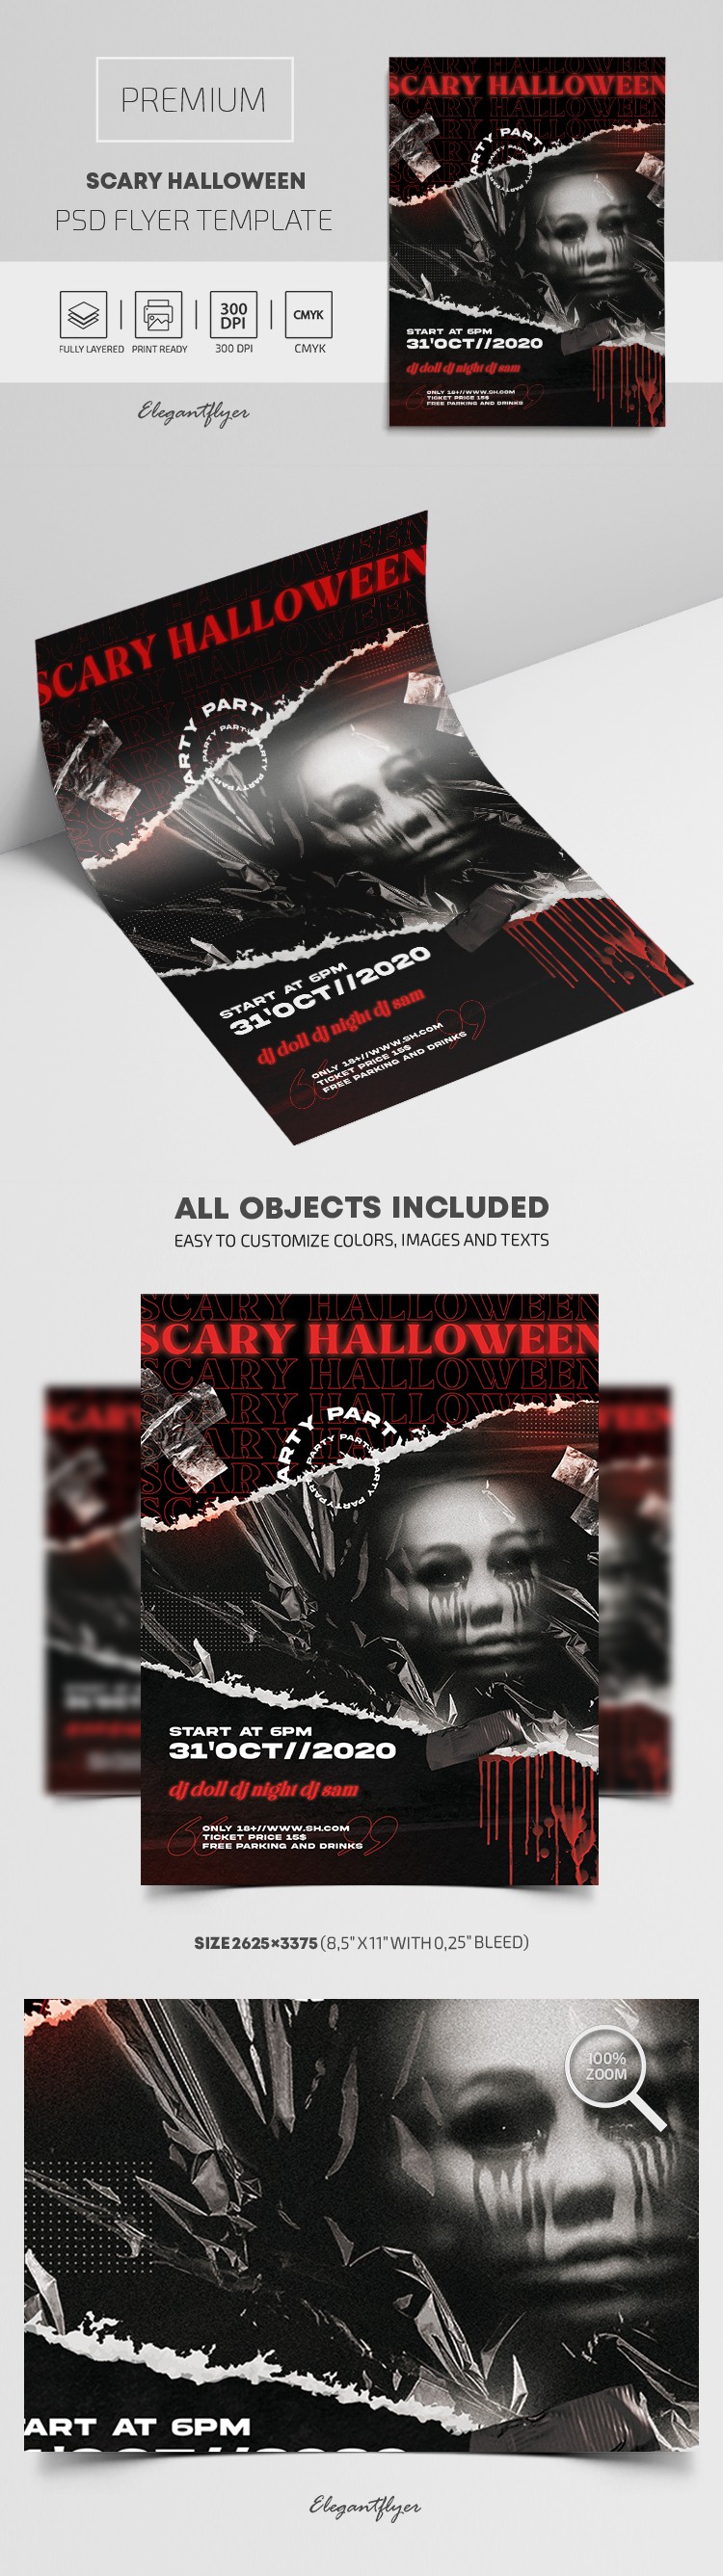 Scary Halloween Flyer by ElegantFlyer